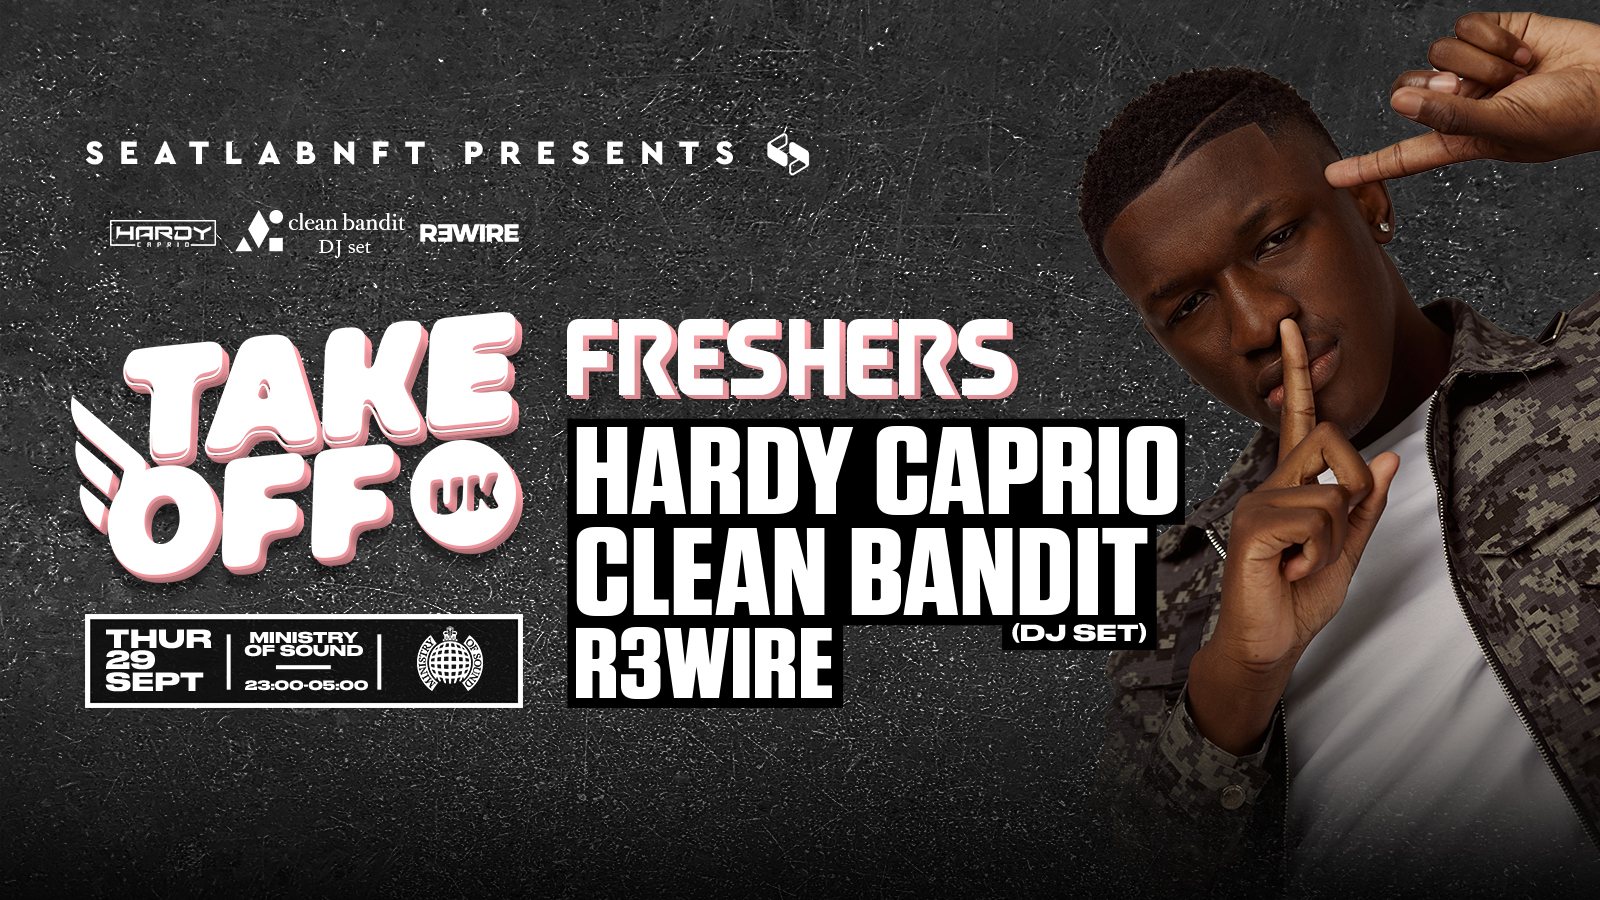 Take Off presents: Clean Bandit DJ Set x Hardy Caprio - Flyer back